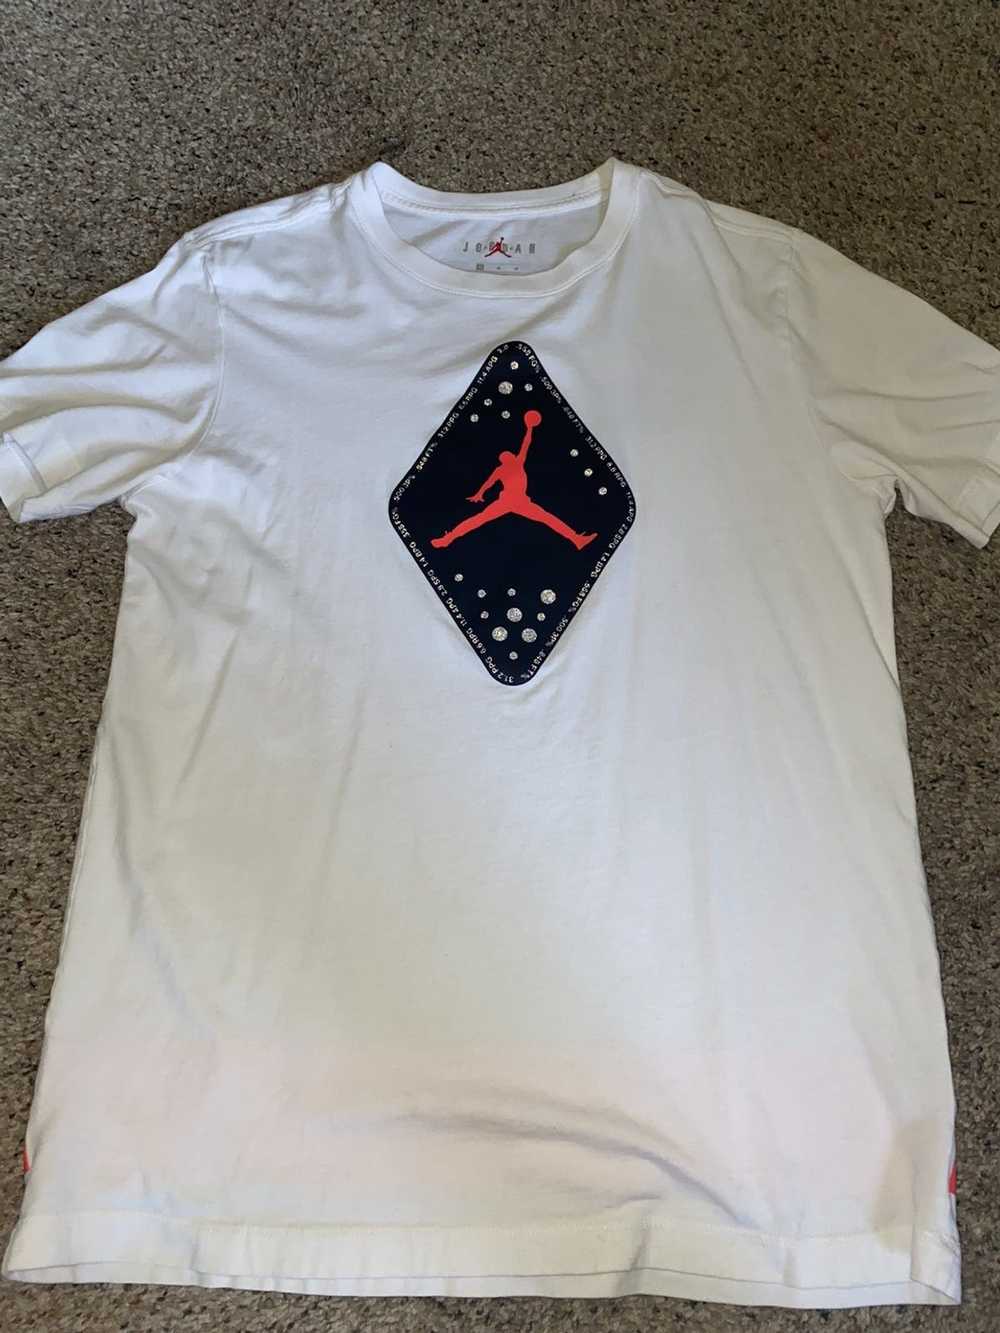 Jordan Brand × Nike Nike Air Jordan T shirt - image 2